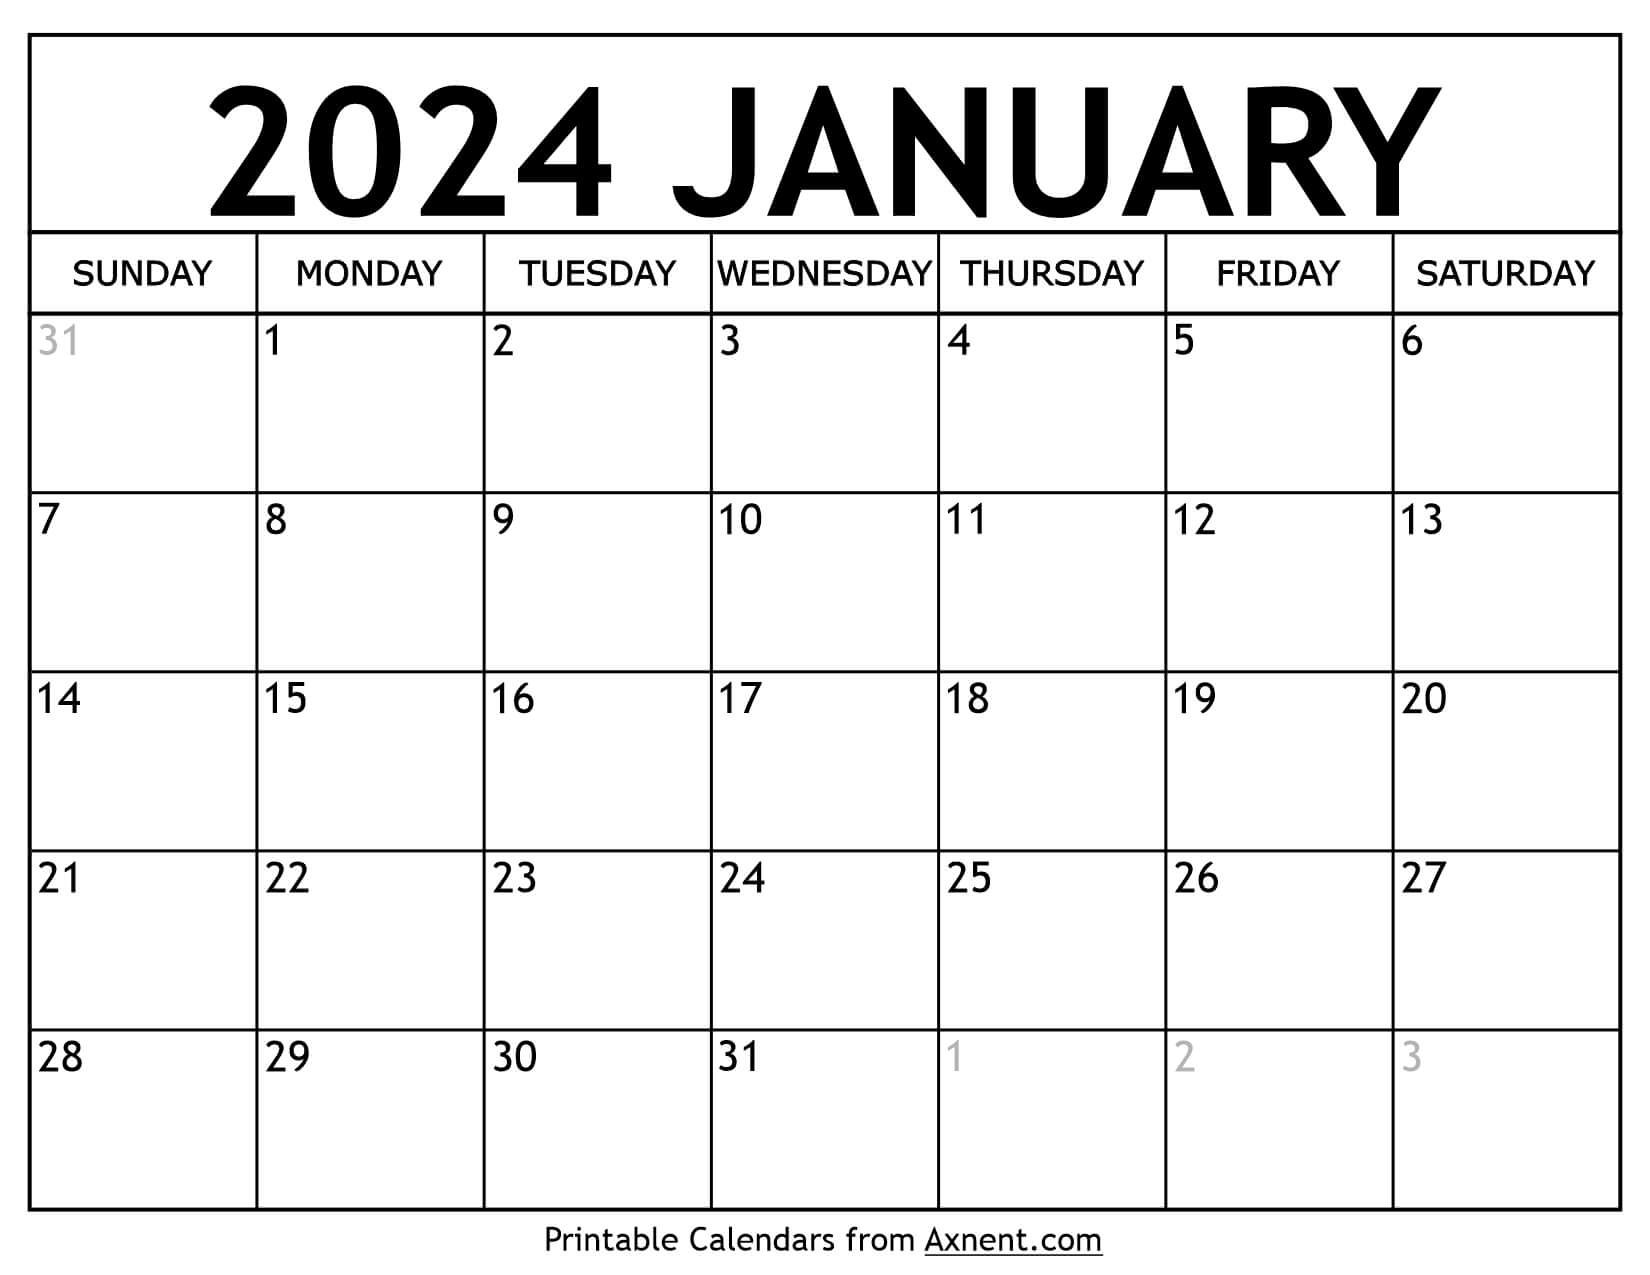 Printable January 2024 Calendar Template - Print Now for January 2024 Calendar Free Printable Calendar